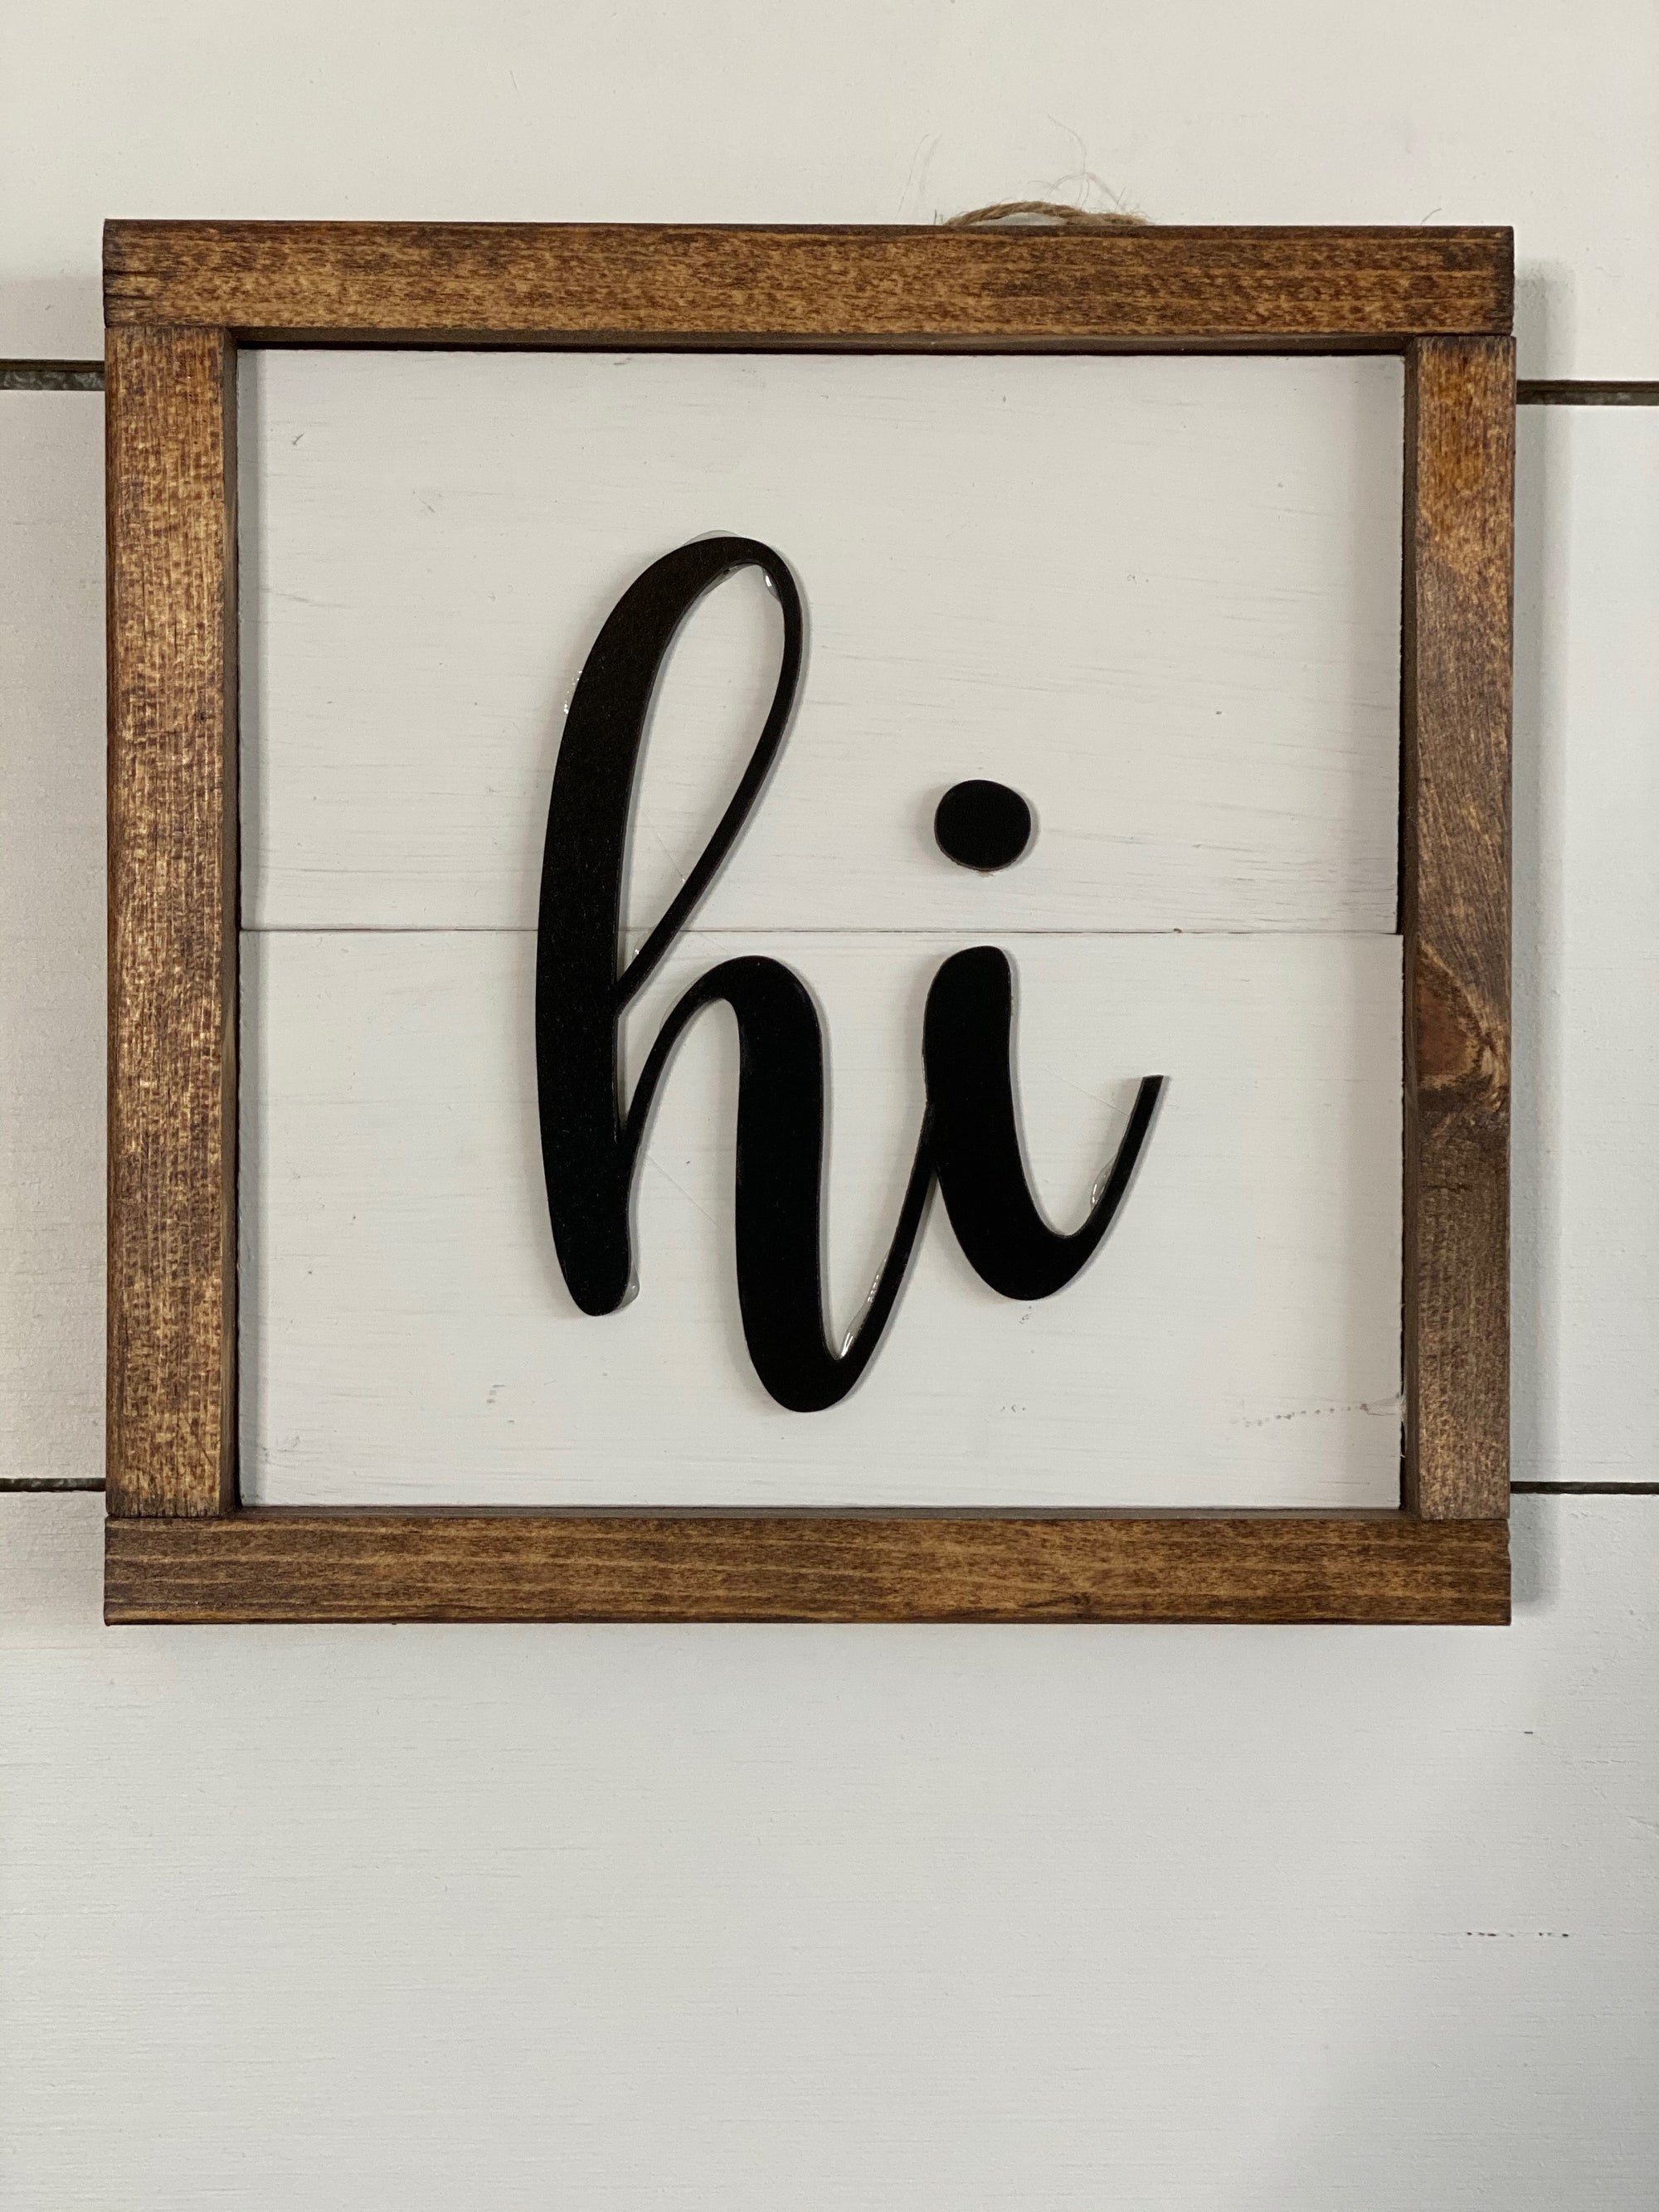 Word Wall Sign "Hi"